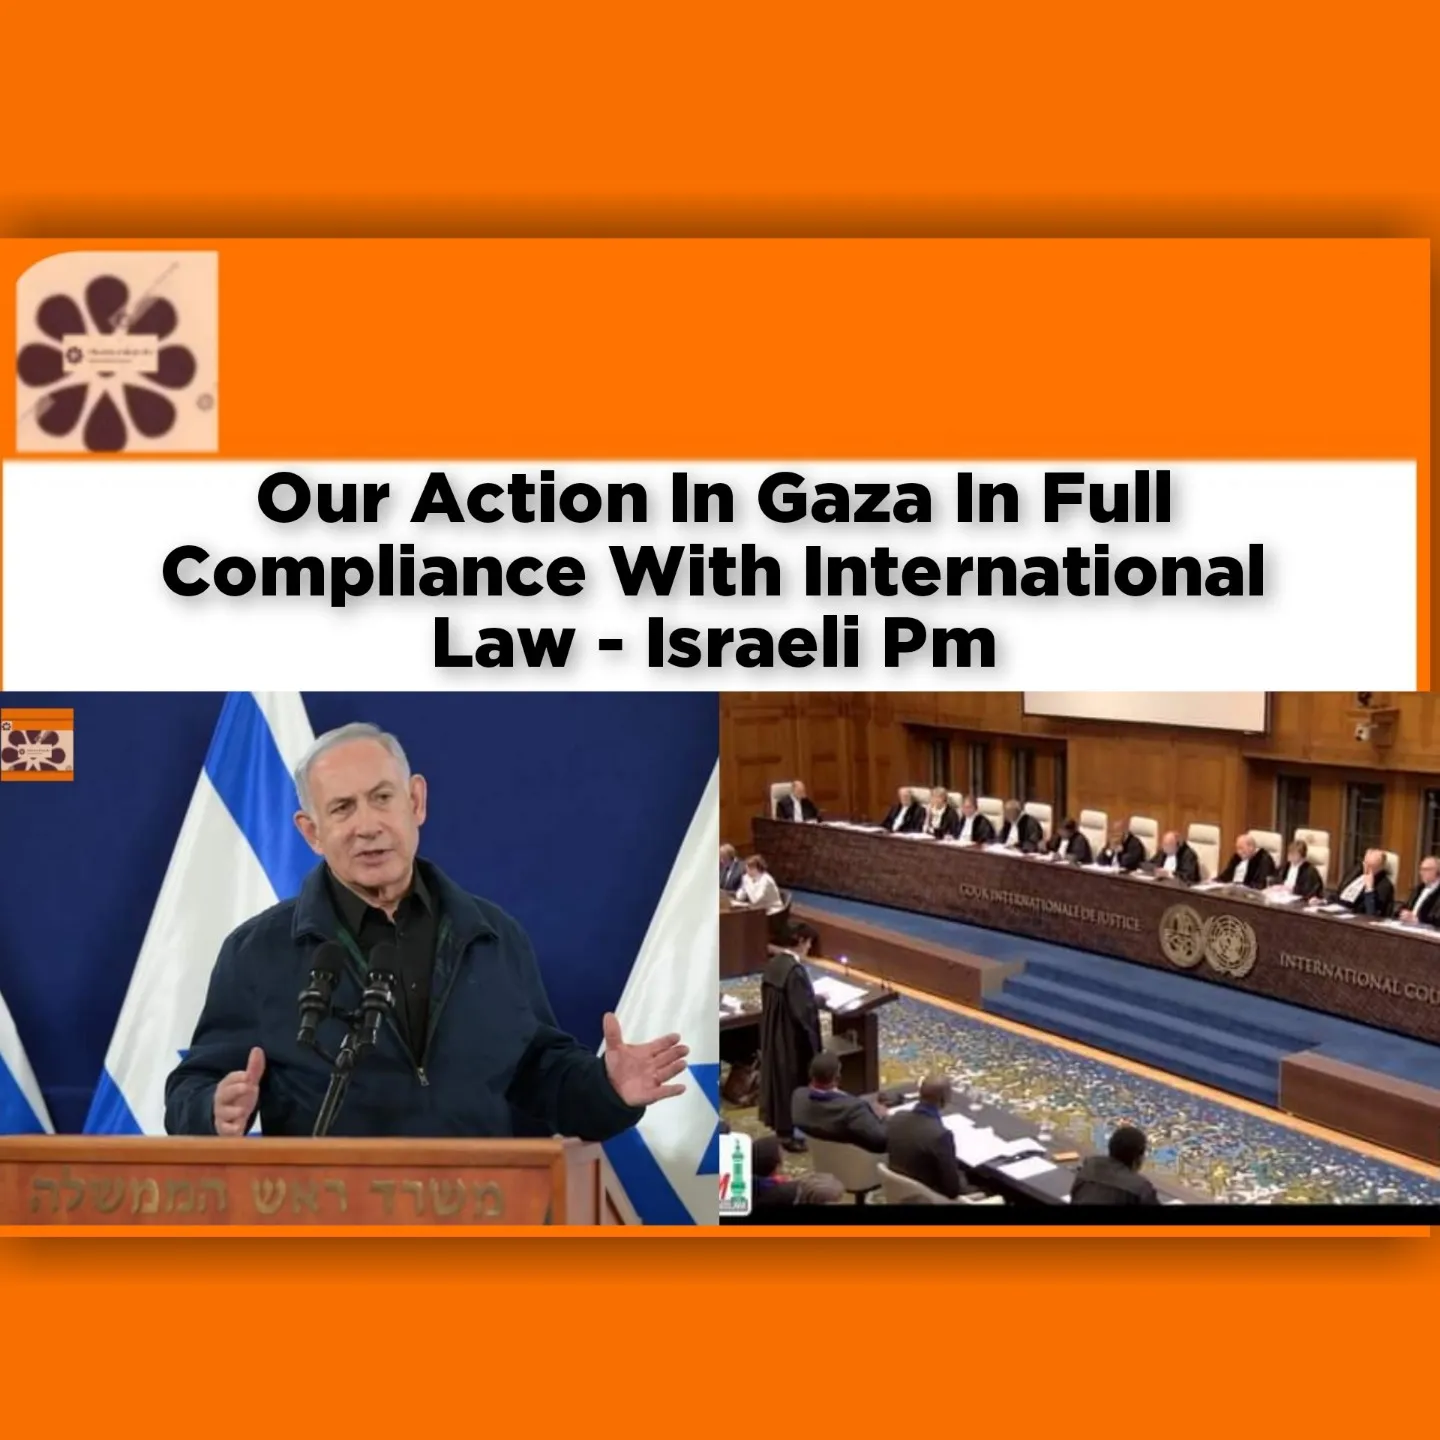 Our Action In Gaza In Full Compliance With International Law - Israeli Pm ~ OsazuwaAkonedo #Israeli #Benjamin #case #Gaza #gazaunderattack #genocide #Hague #Hamas #ICJ #justice #Netanyahu #Palestine #SouthAfrica